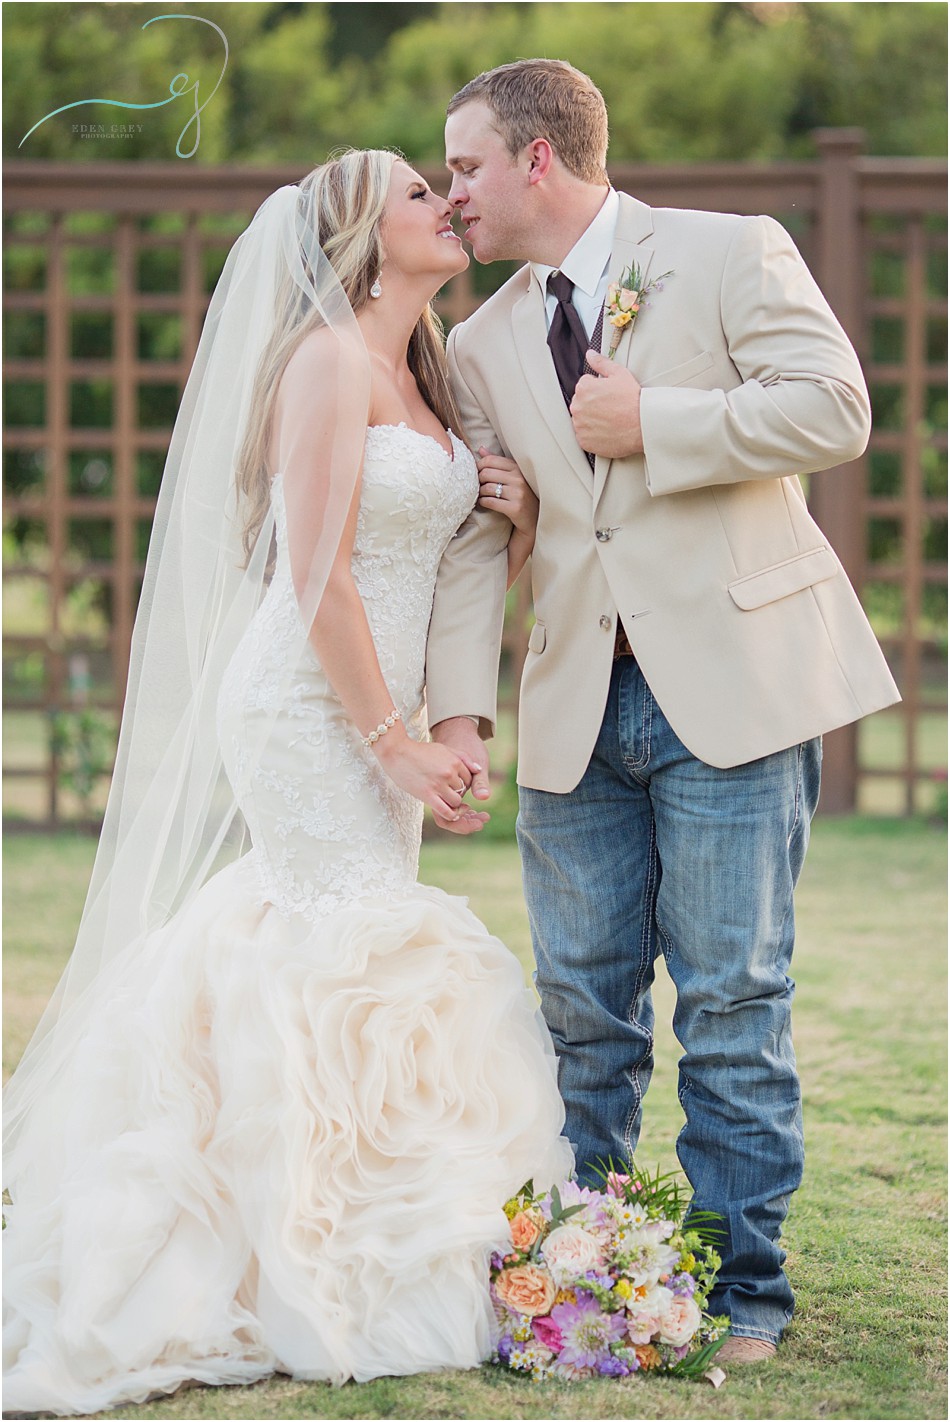 Houston Wedding Photographer available for destination weddings